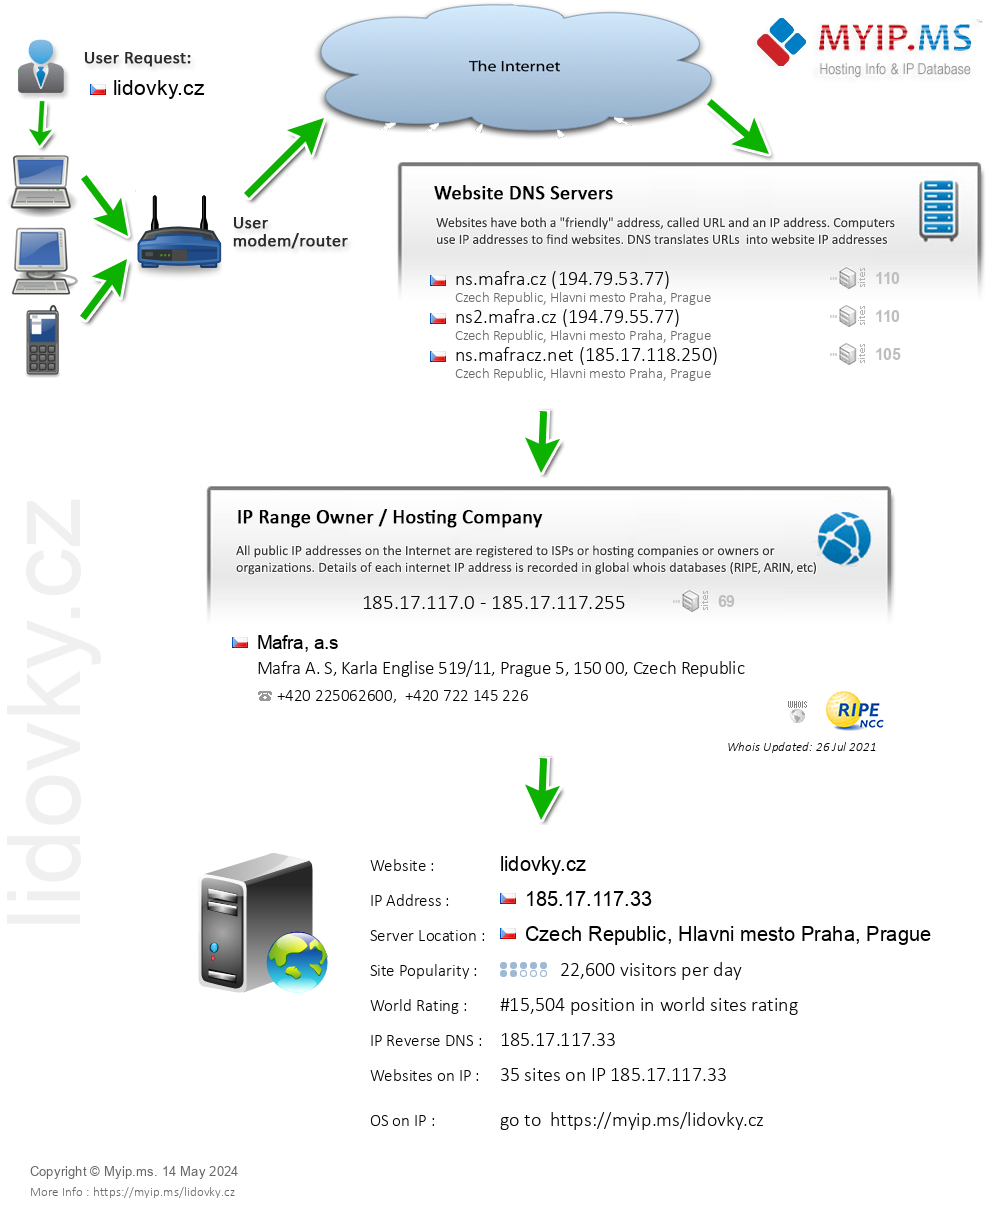 Lidovky.cz - Website Hosting Visual IP Diagram